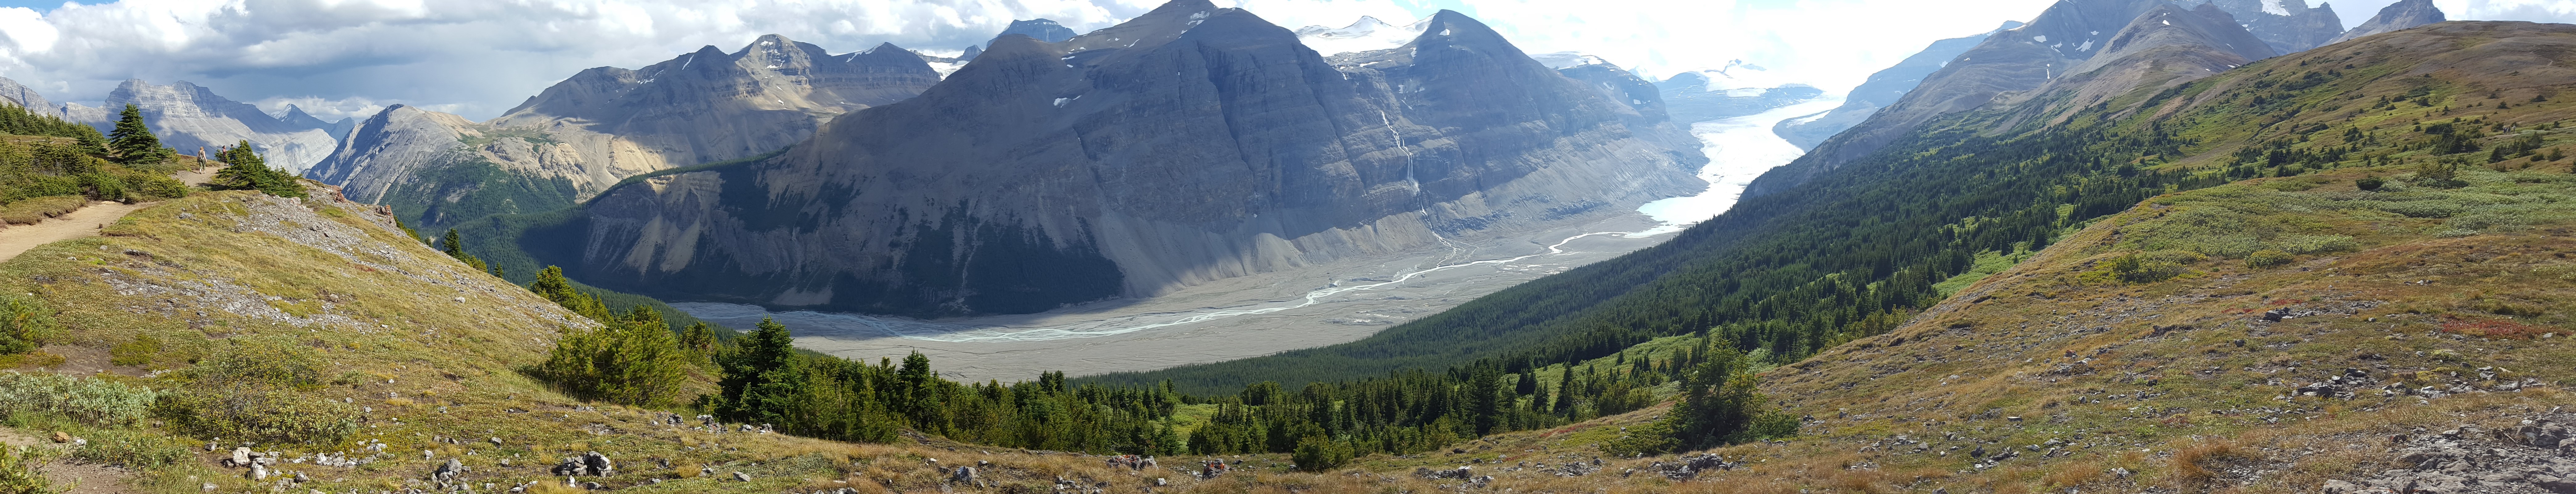 Parker Ridge panoramic view of the Saskatchewan Glacier and mouth of the North Saskatchewan River.